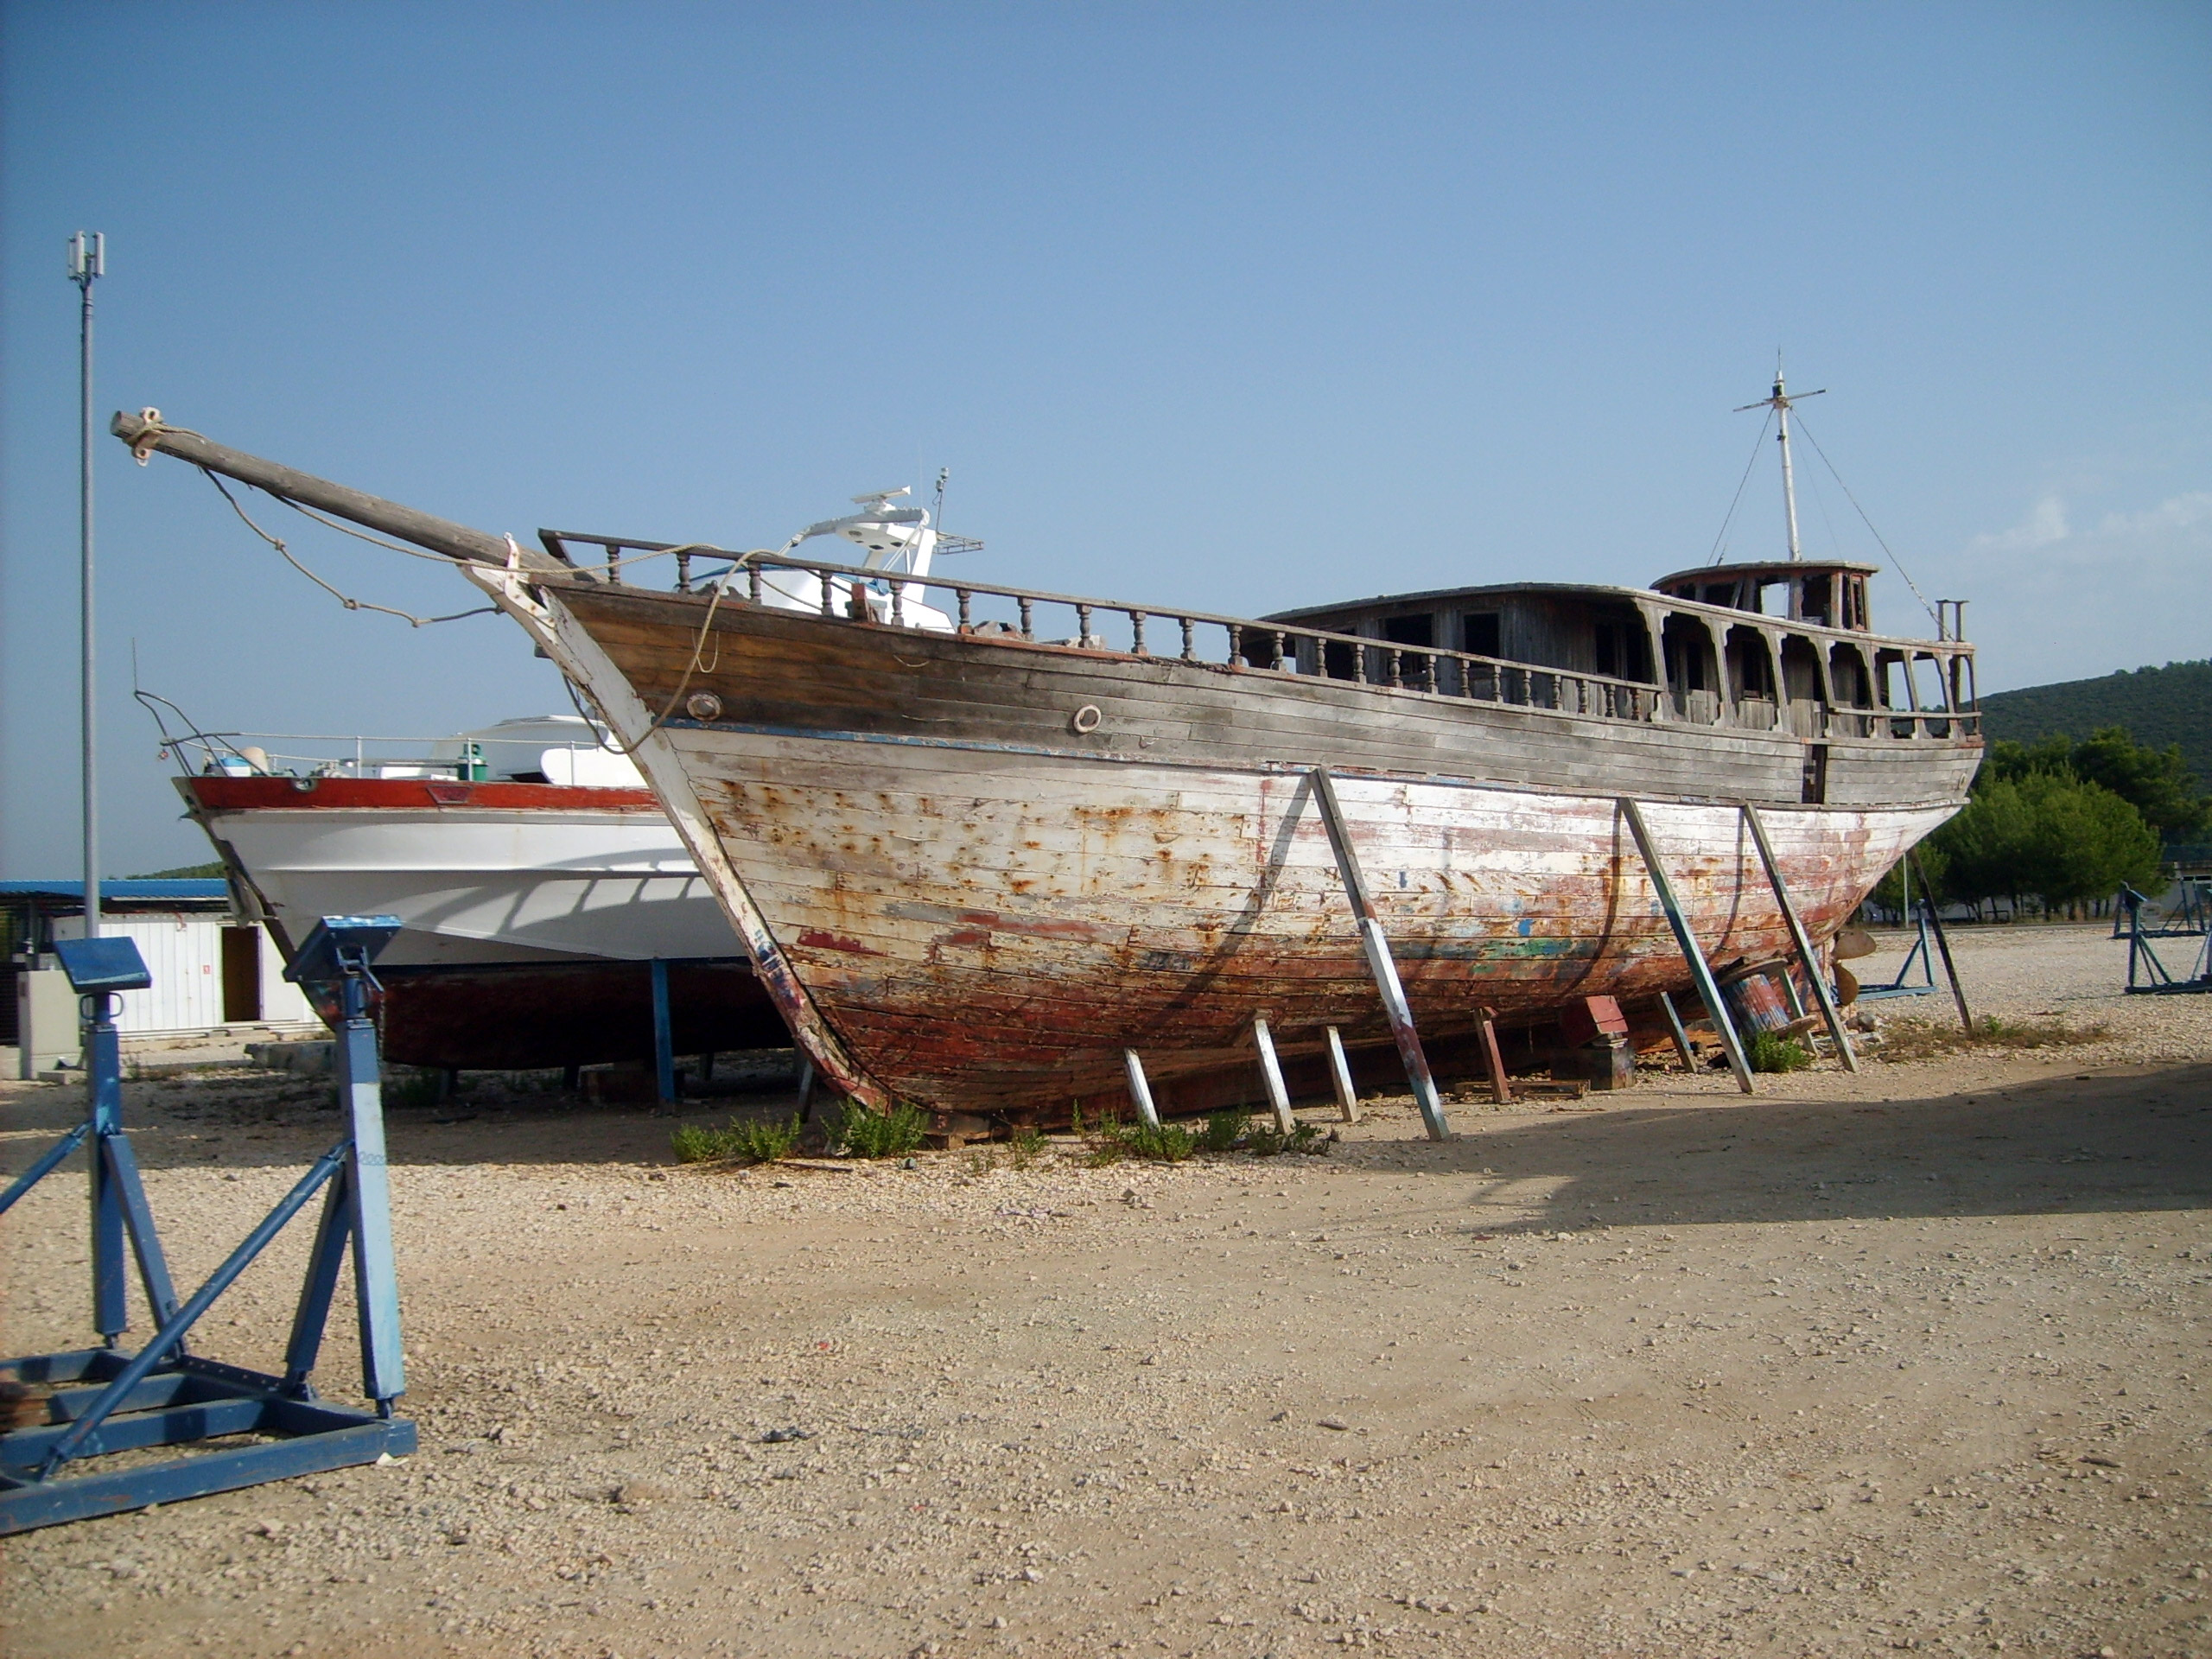 Free Image: Old wooden ship | Libreshot Public Domain Photos